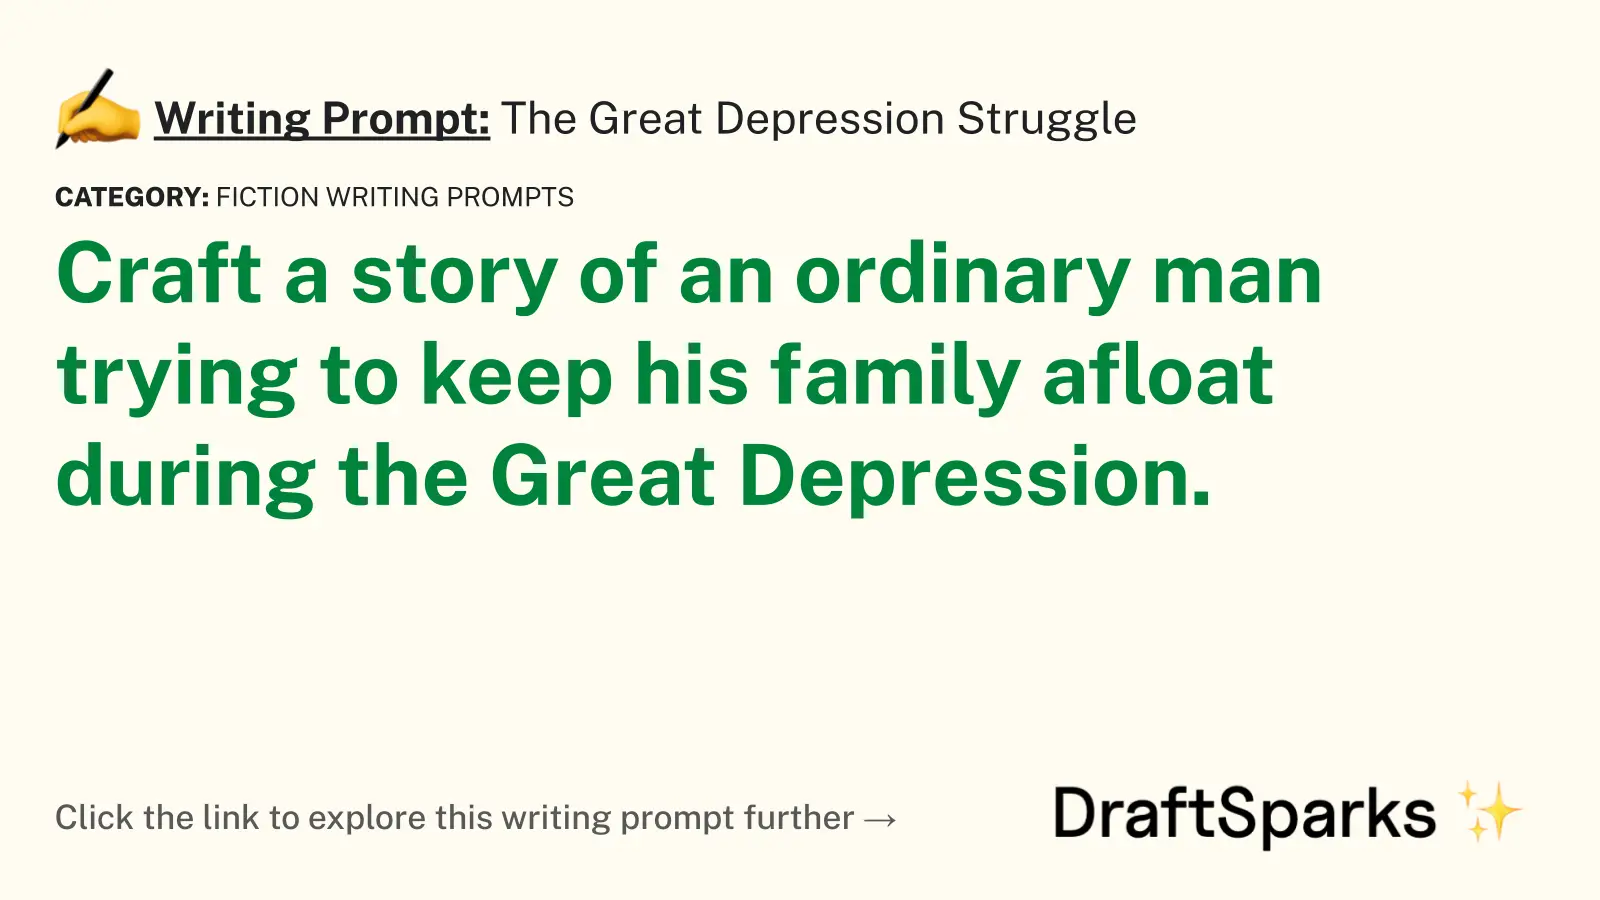 The Great Depression Struggle